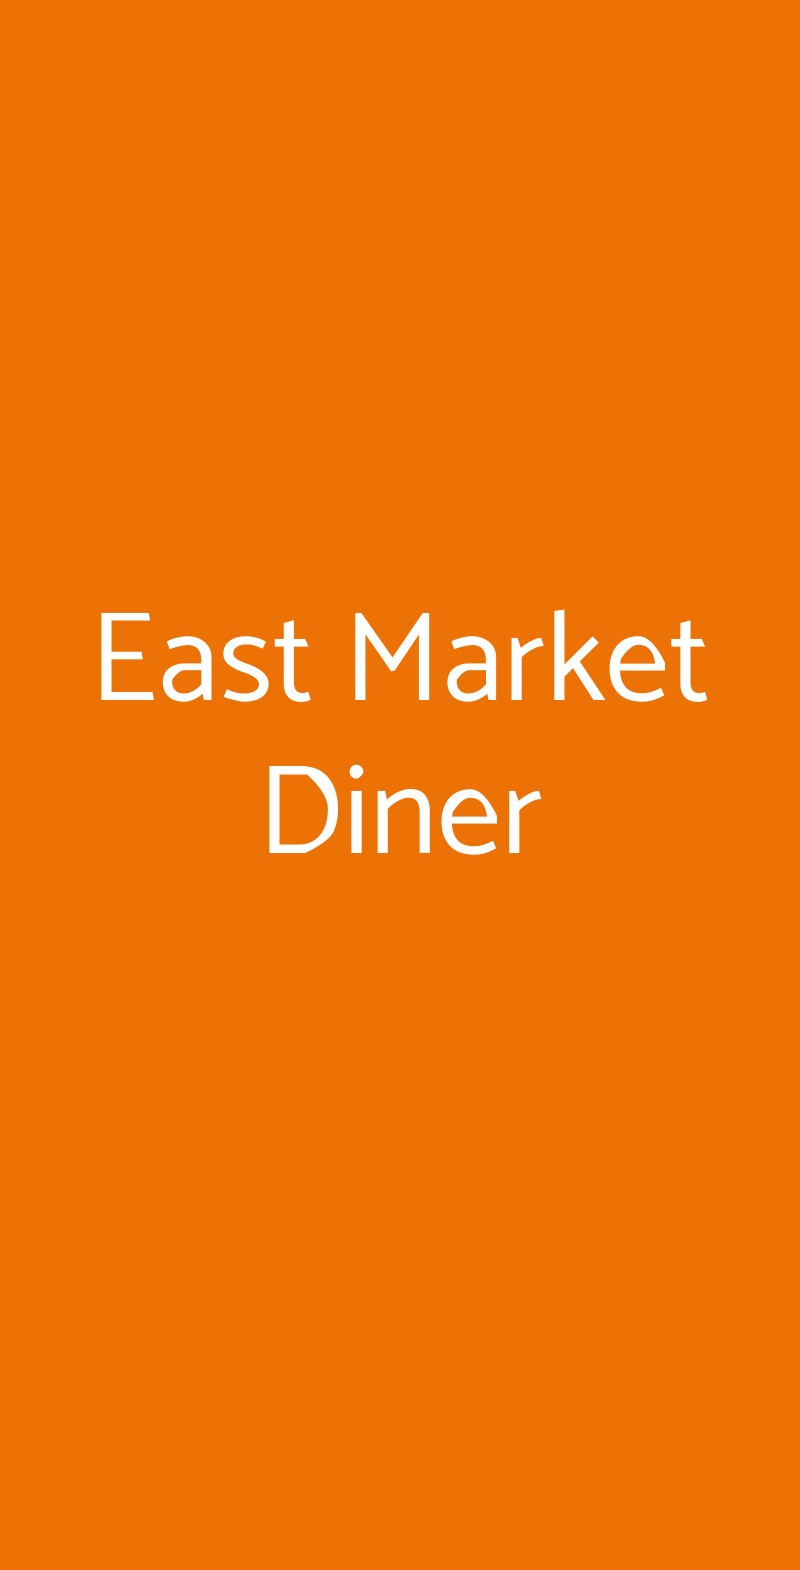 East Market Diner Milano menù 1 pagina